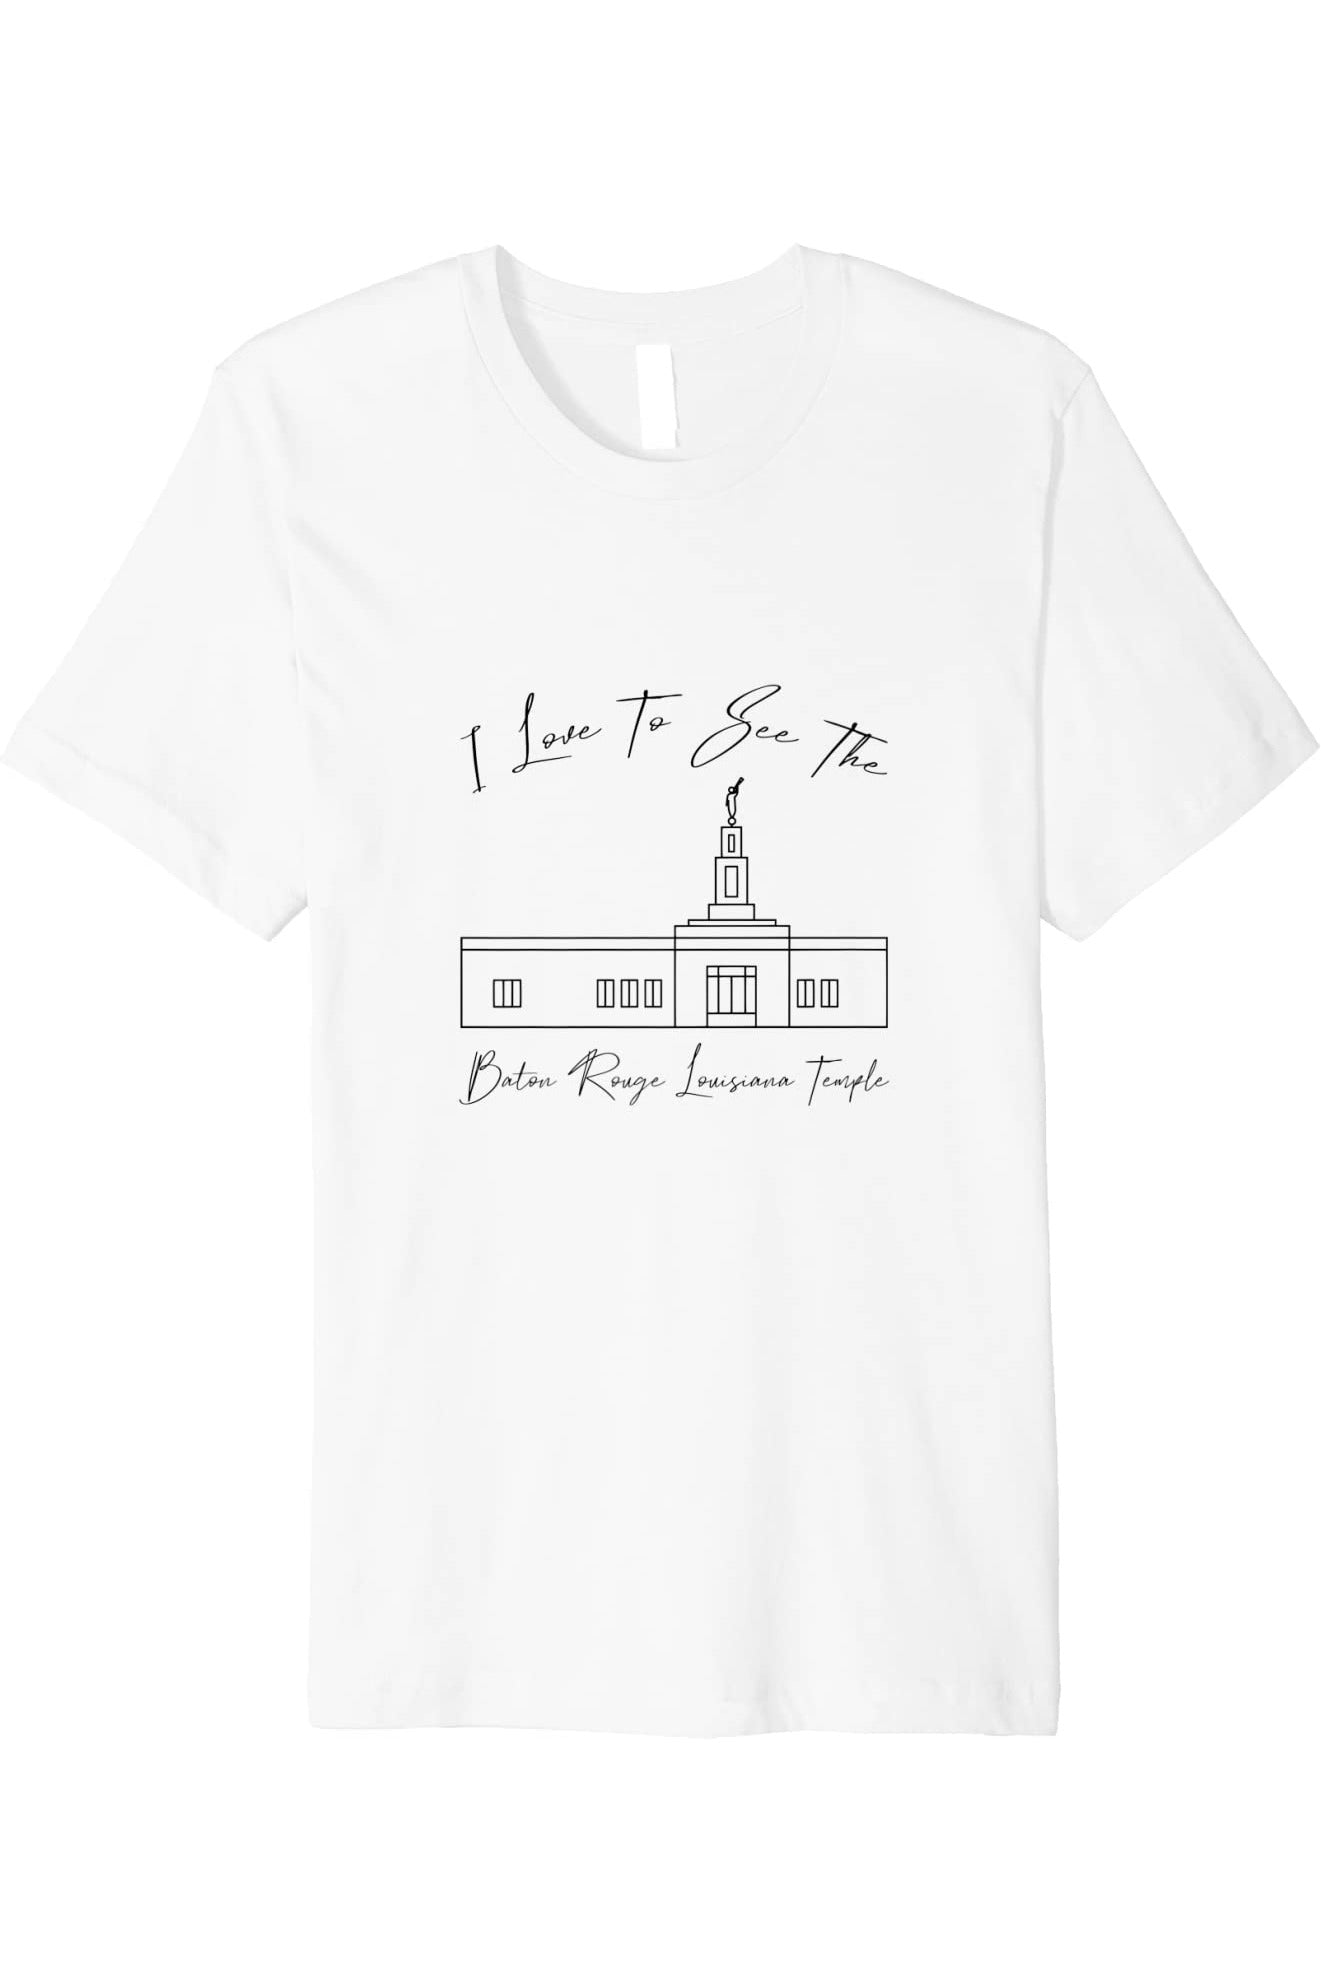 Baton Rouge Louisiana Temple T-Shirt - Premium - Calligraphy Style (English) US